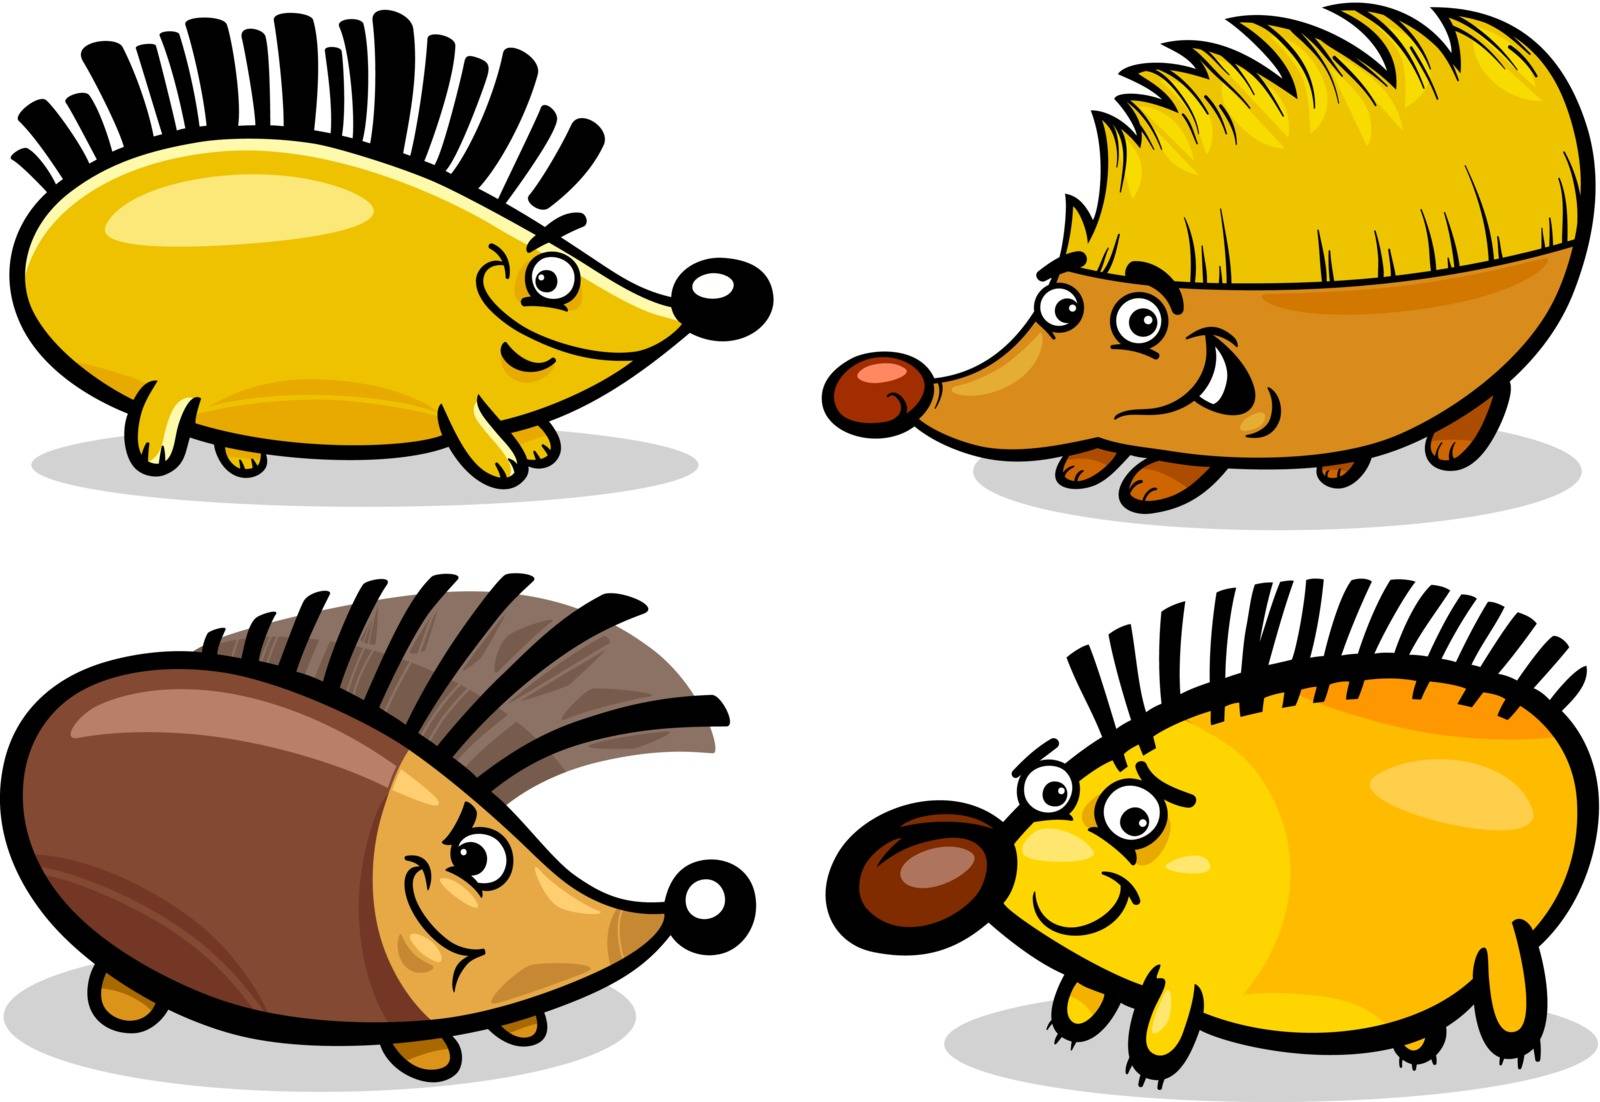 hedgehogs set cartoon illustration by izakowski